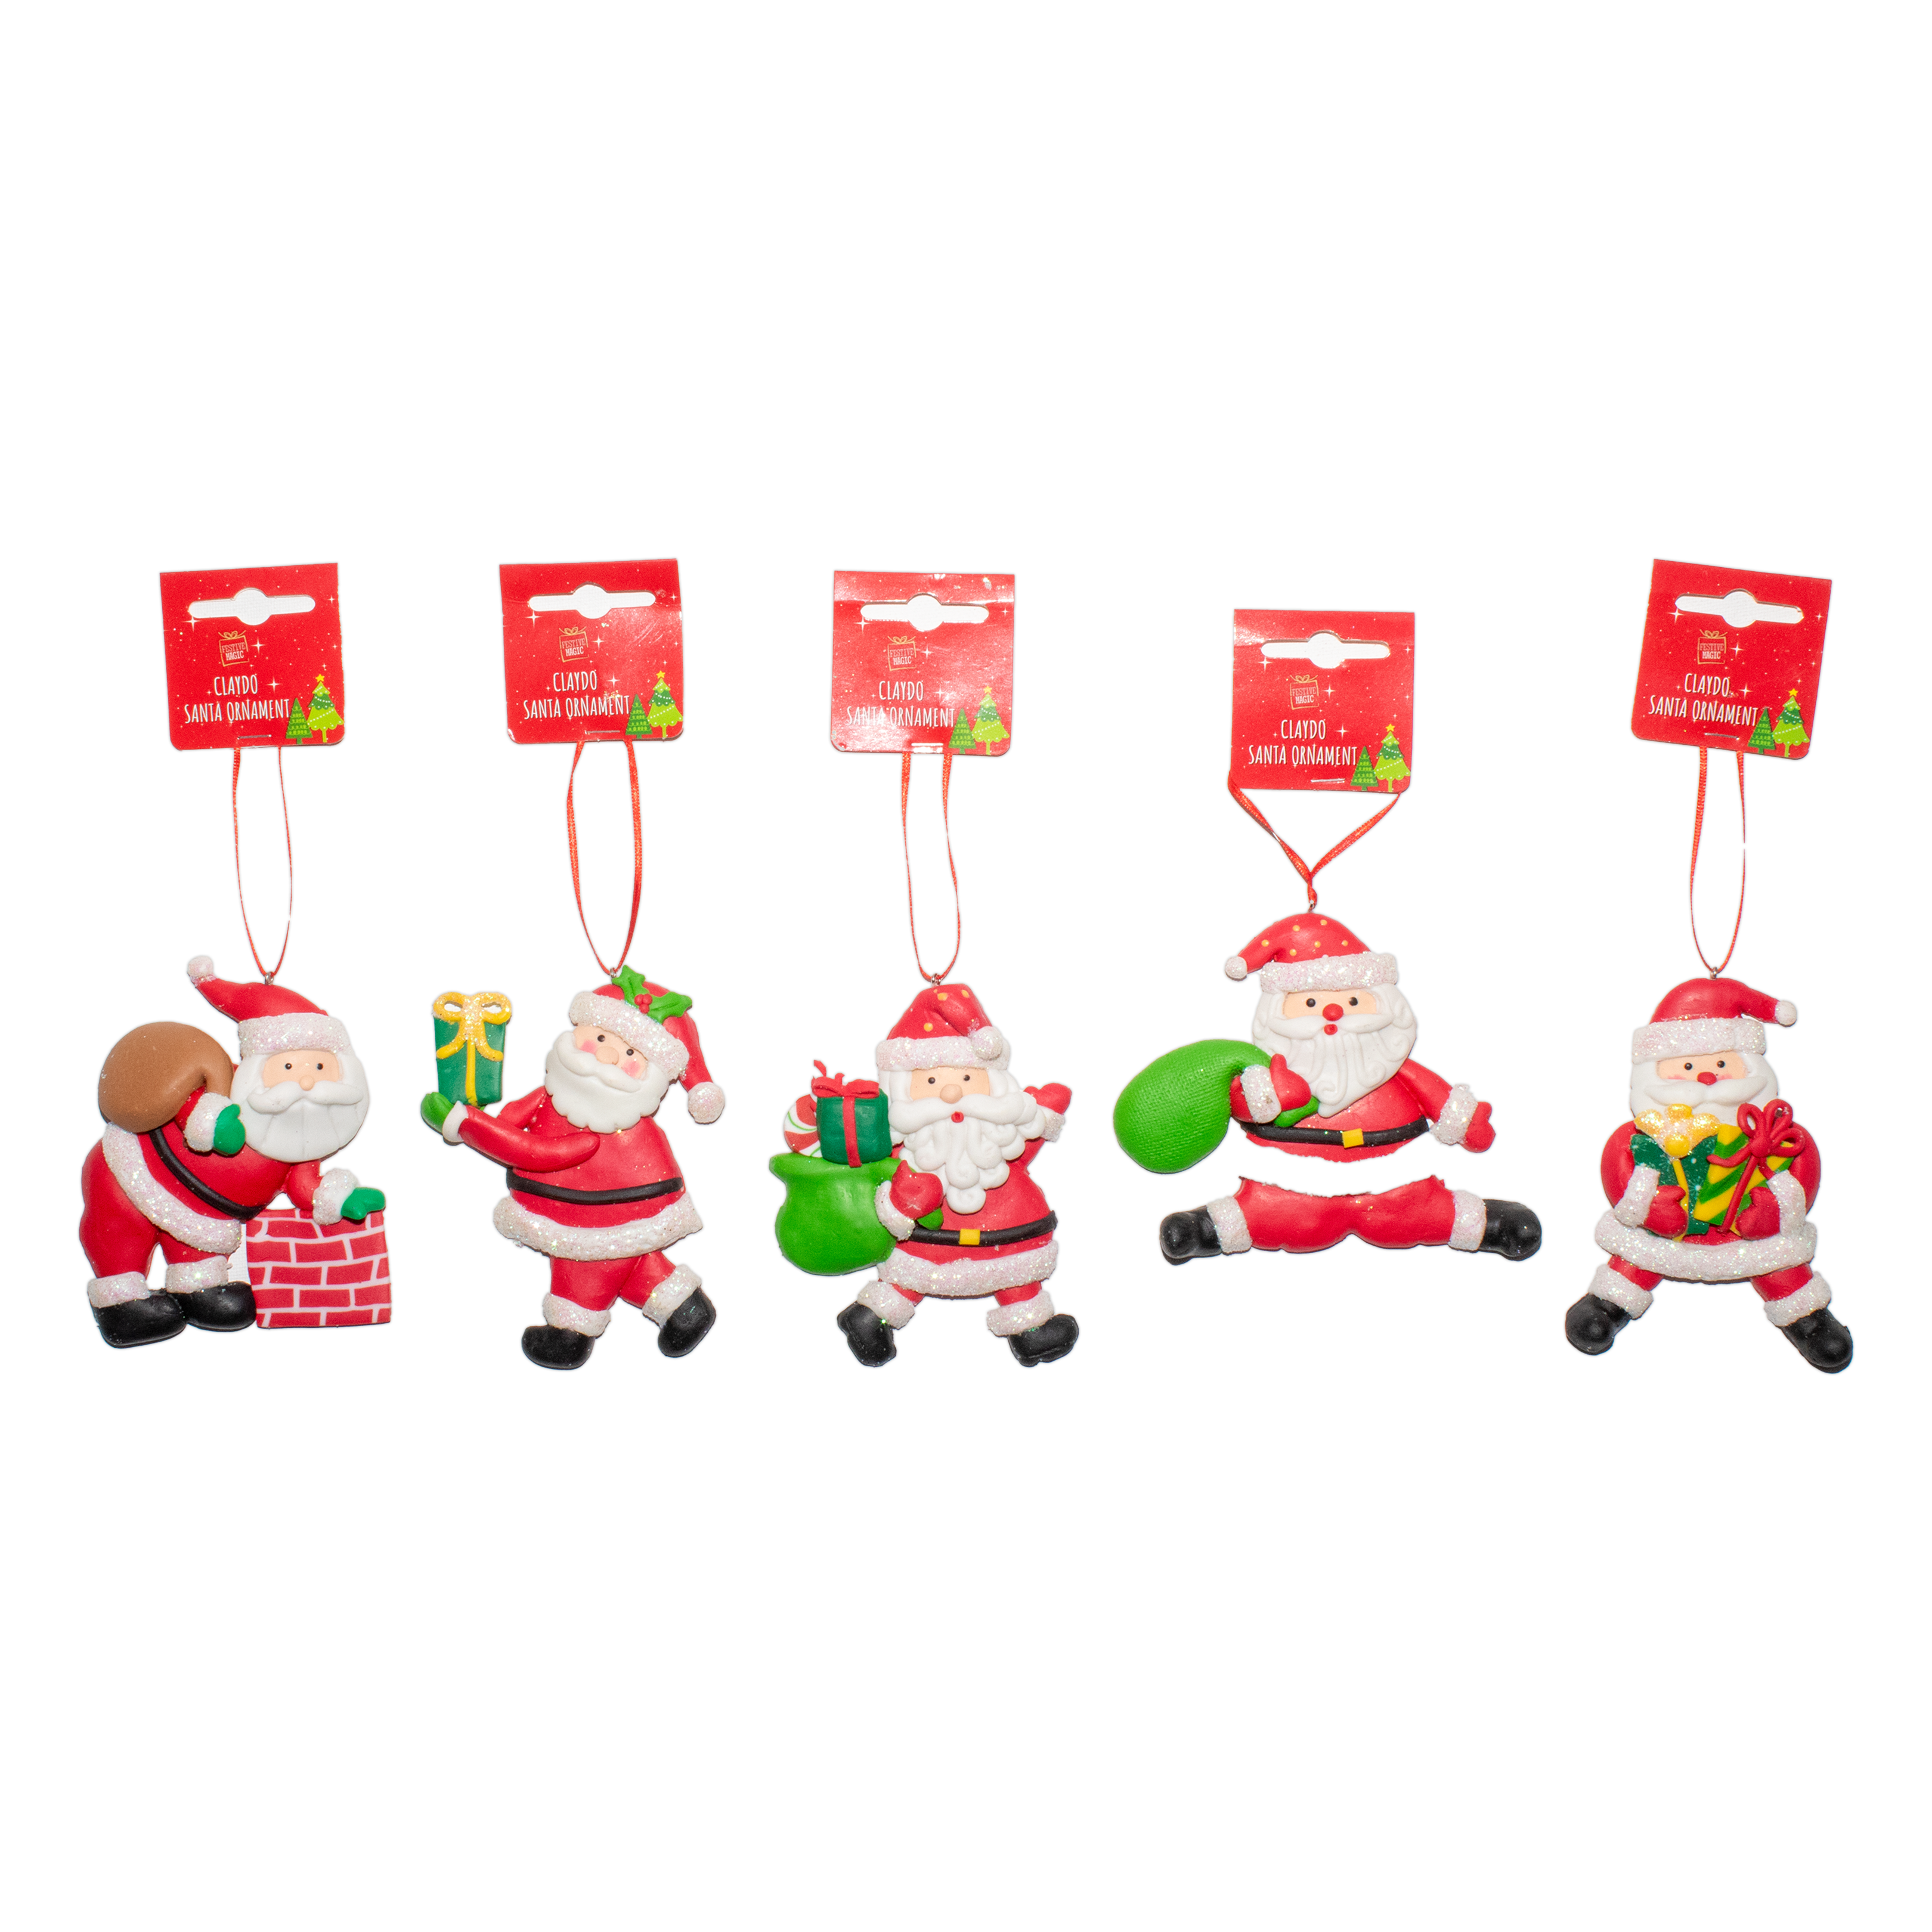 Hanging Santa Decoration - Assorted Design, 1pc